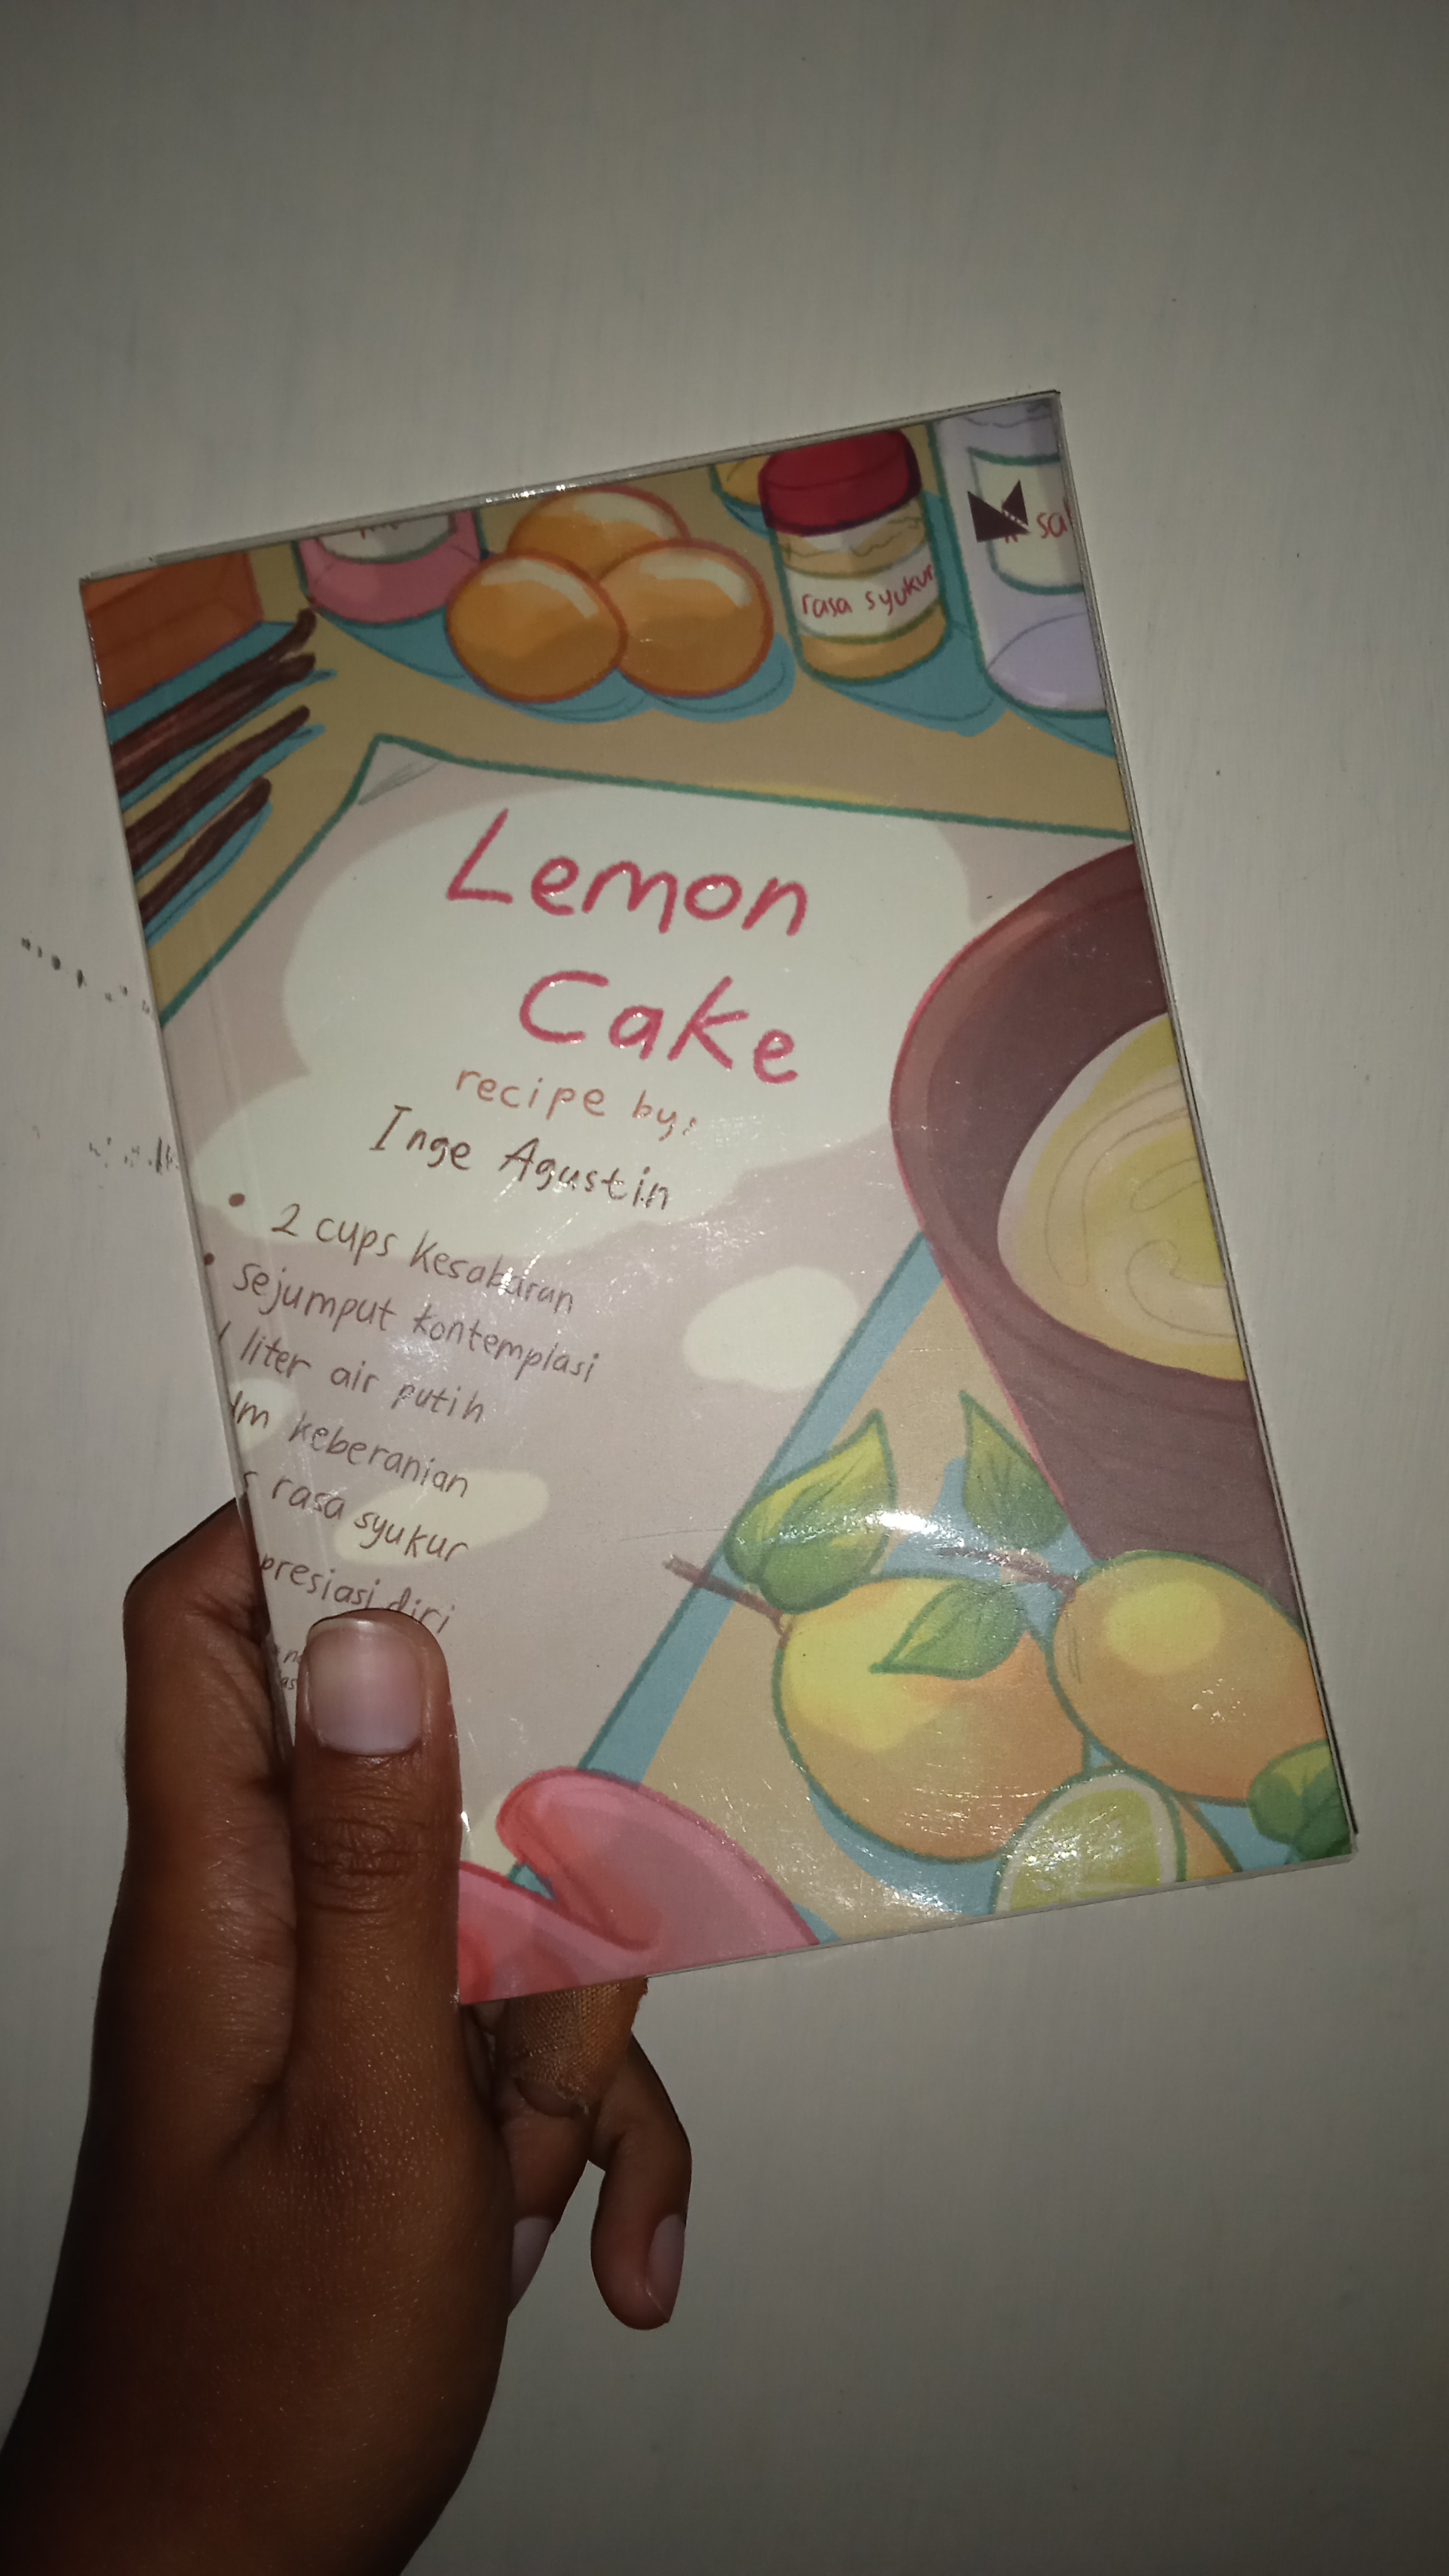 Sampul buku "Lemon Cake"